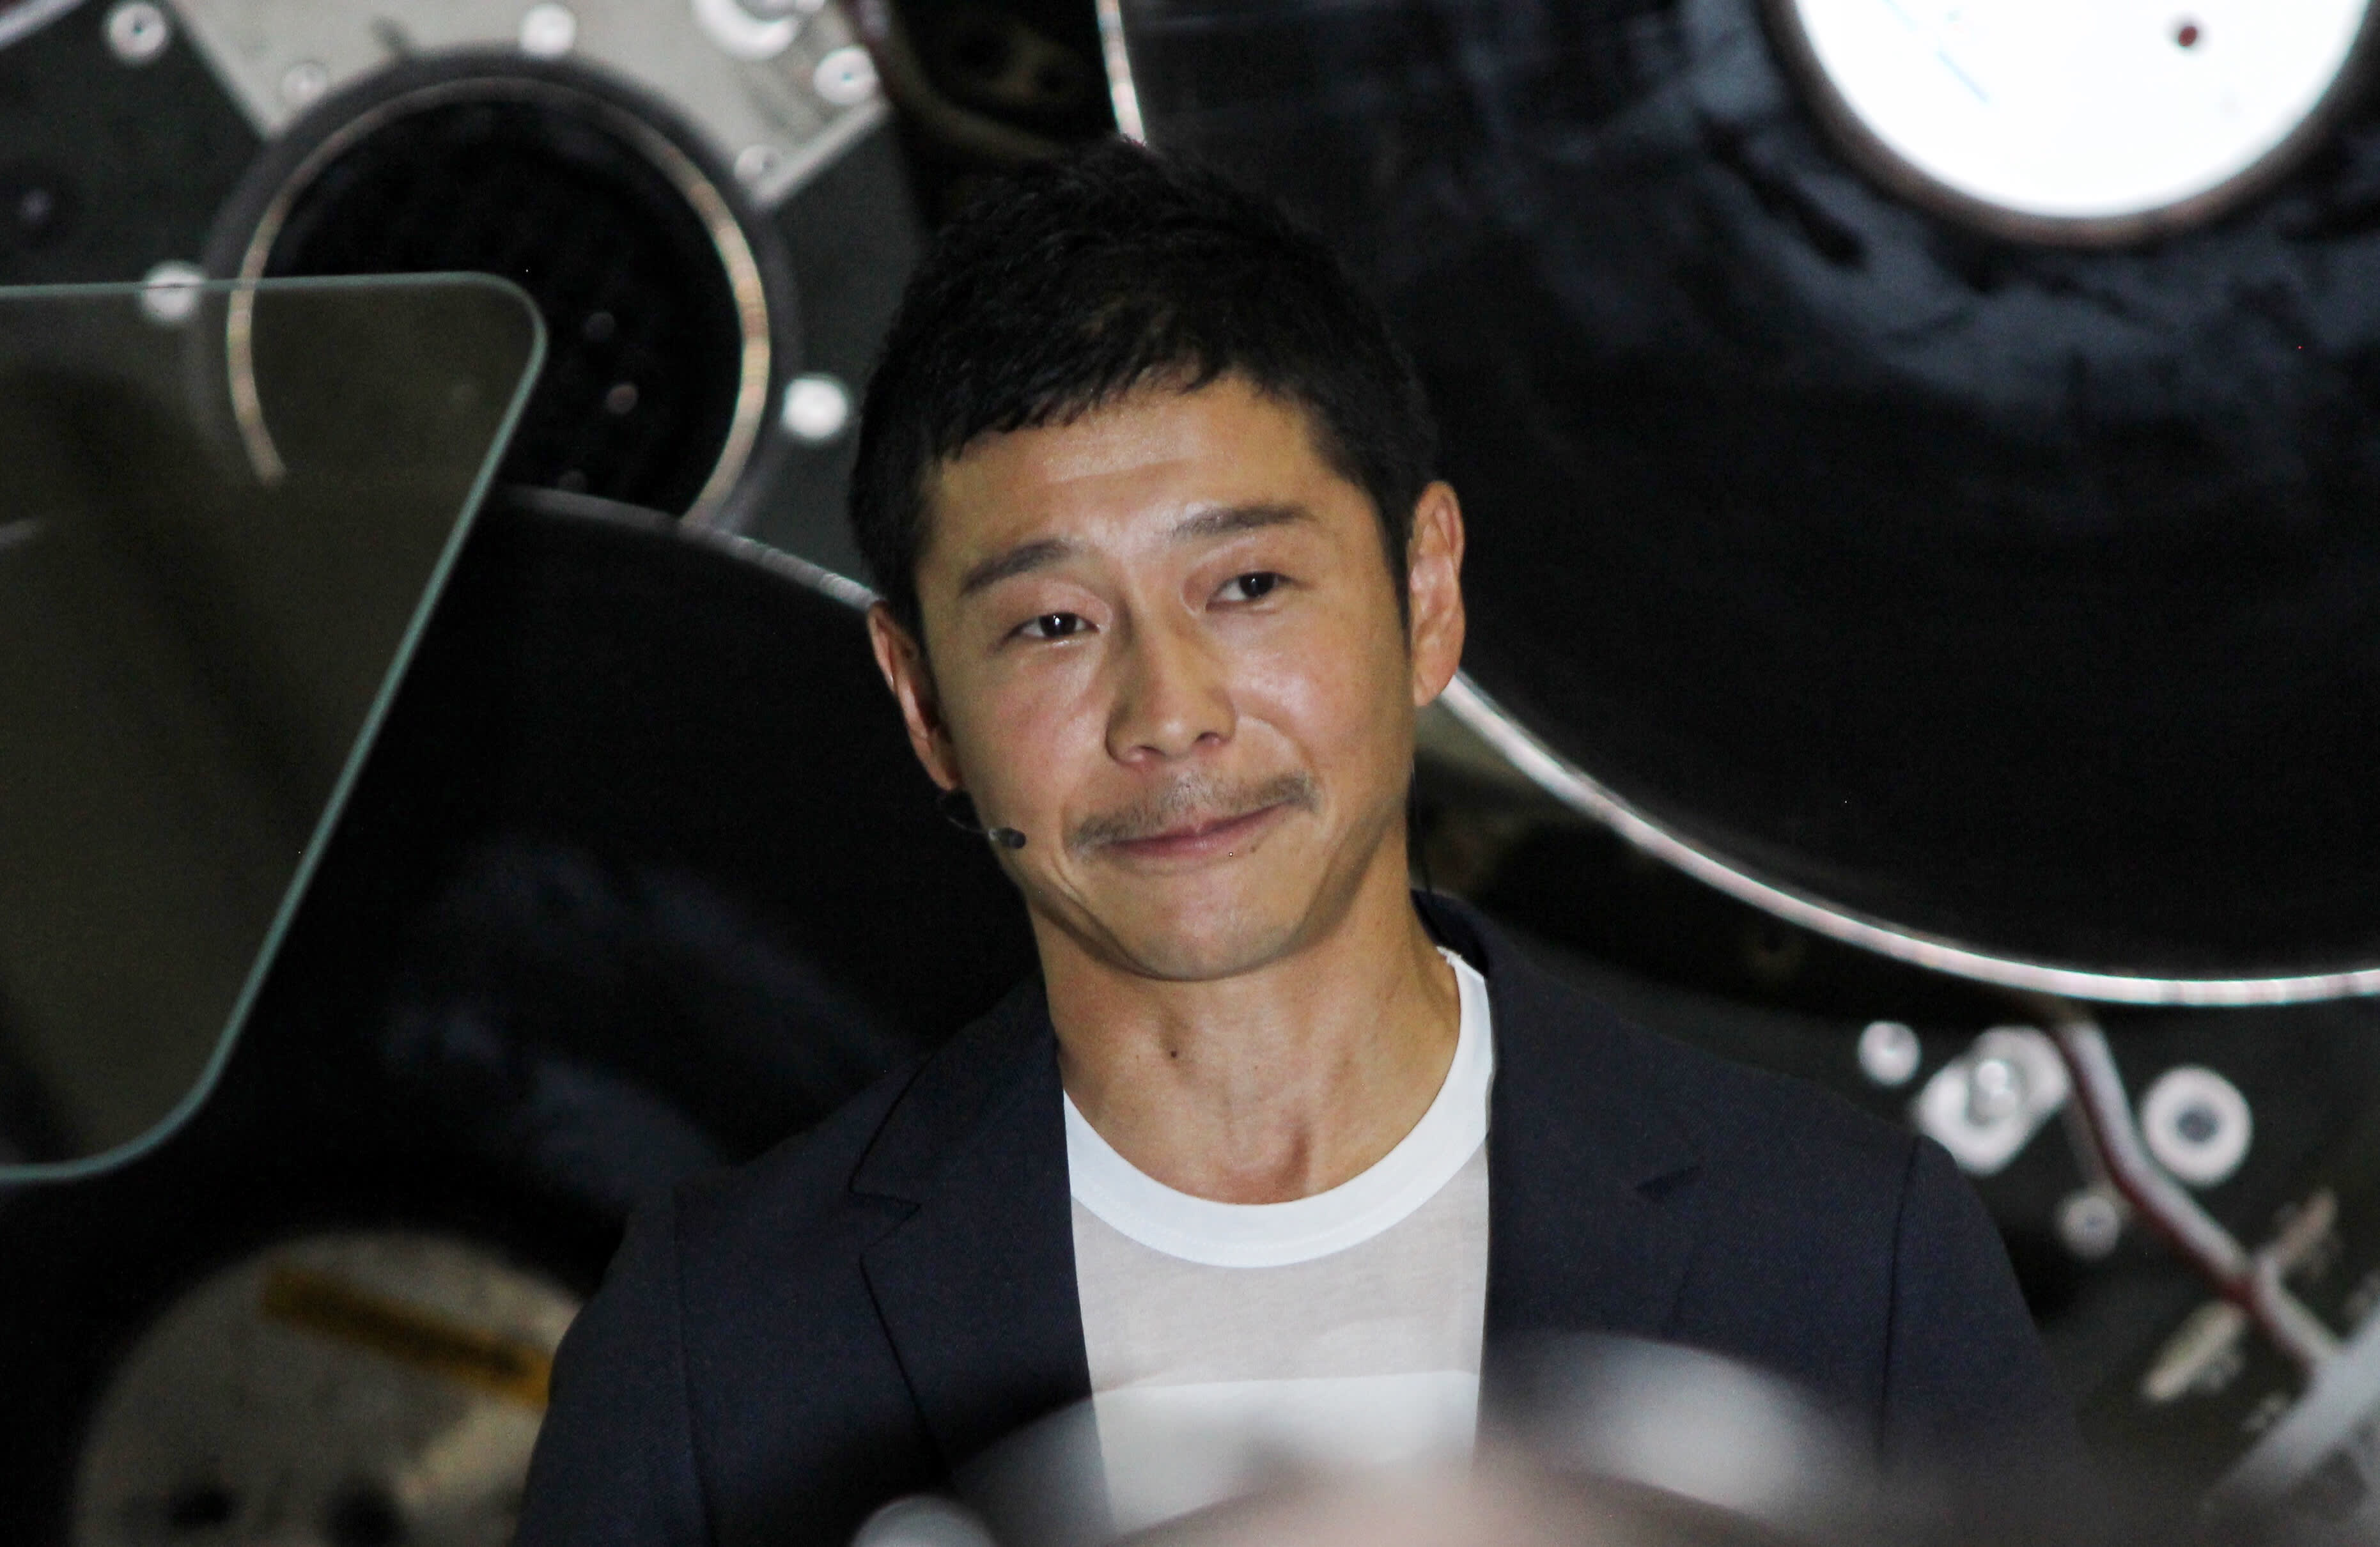 Yusaku Maezawa opens public seats on the SpaceX Starship lunar flight